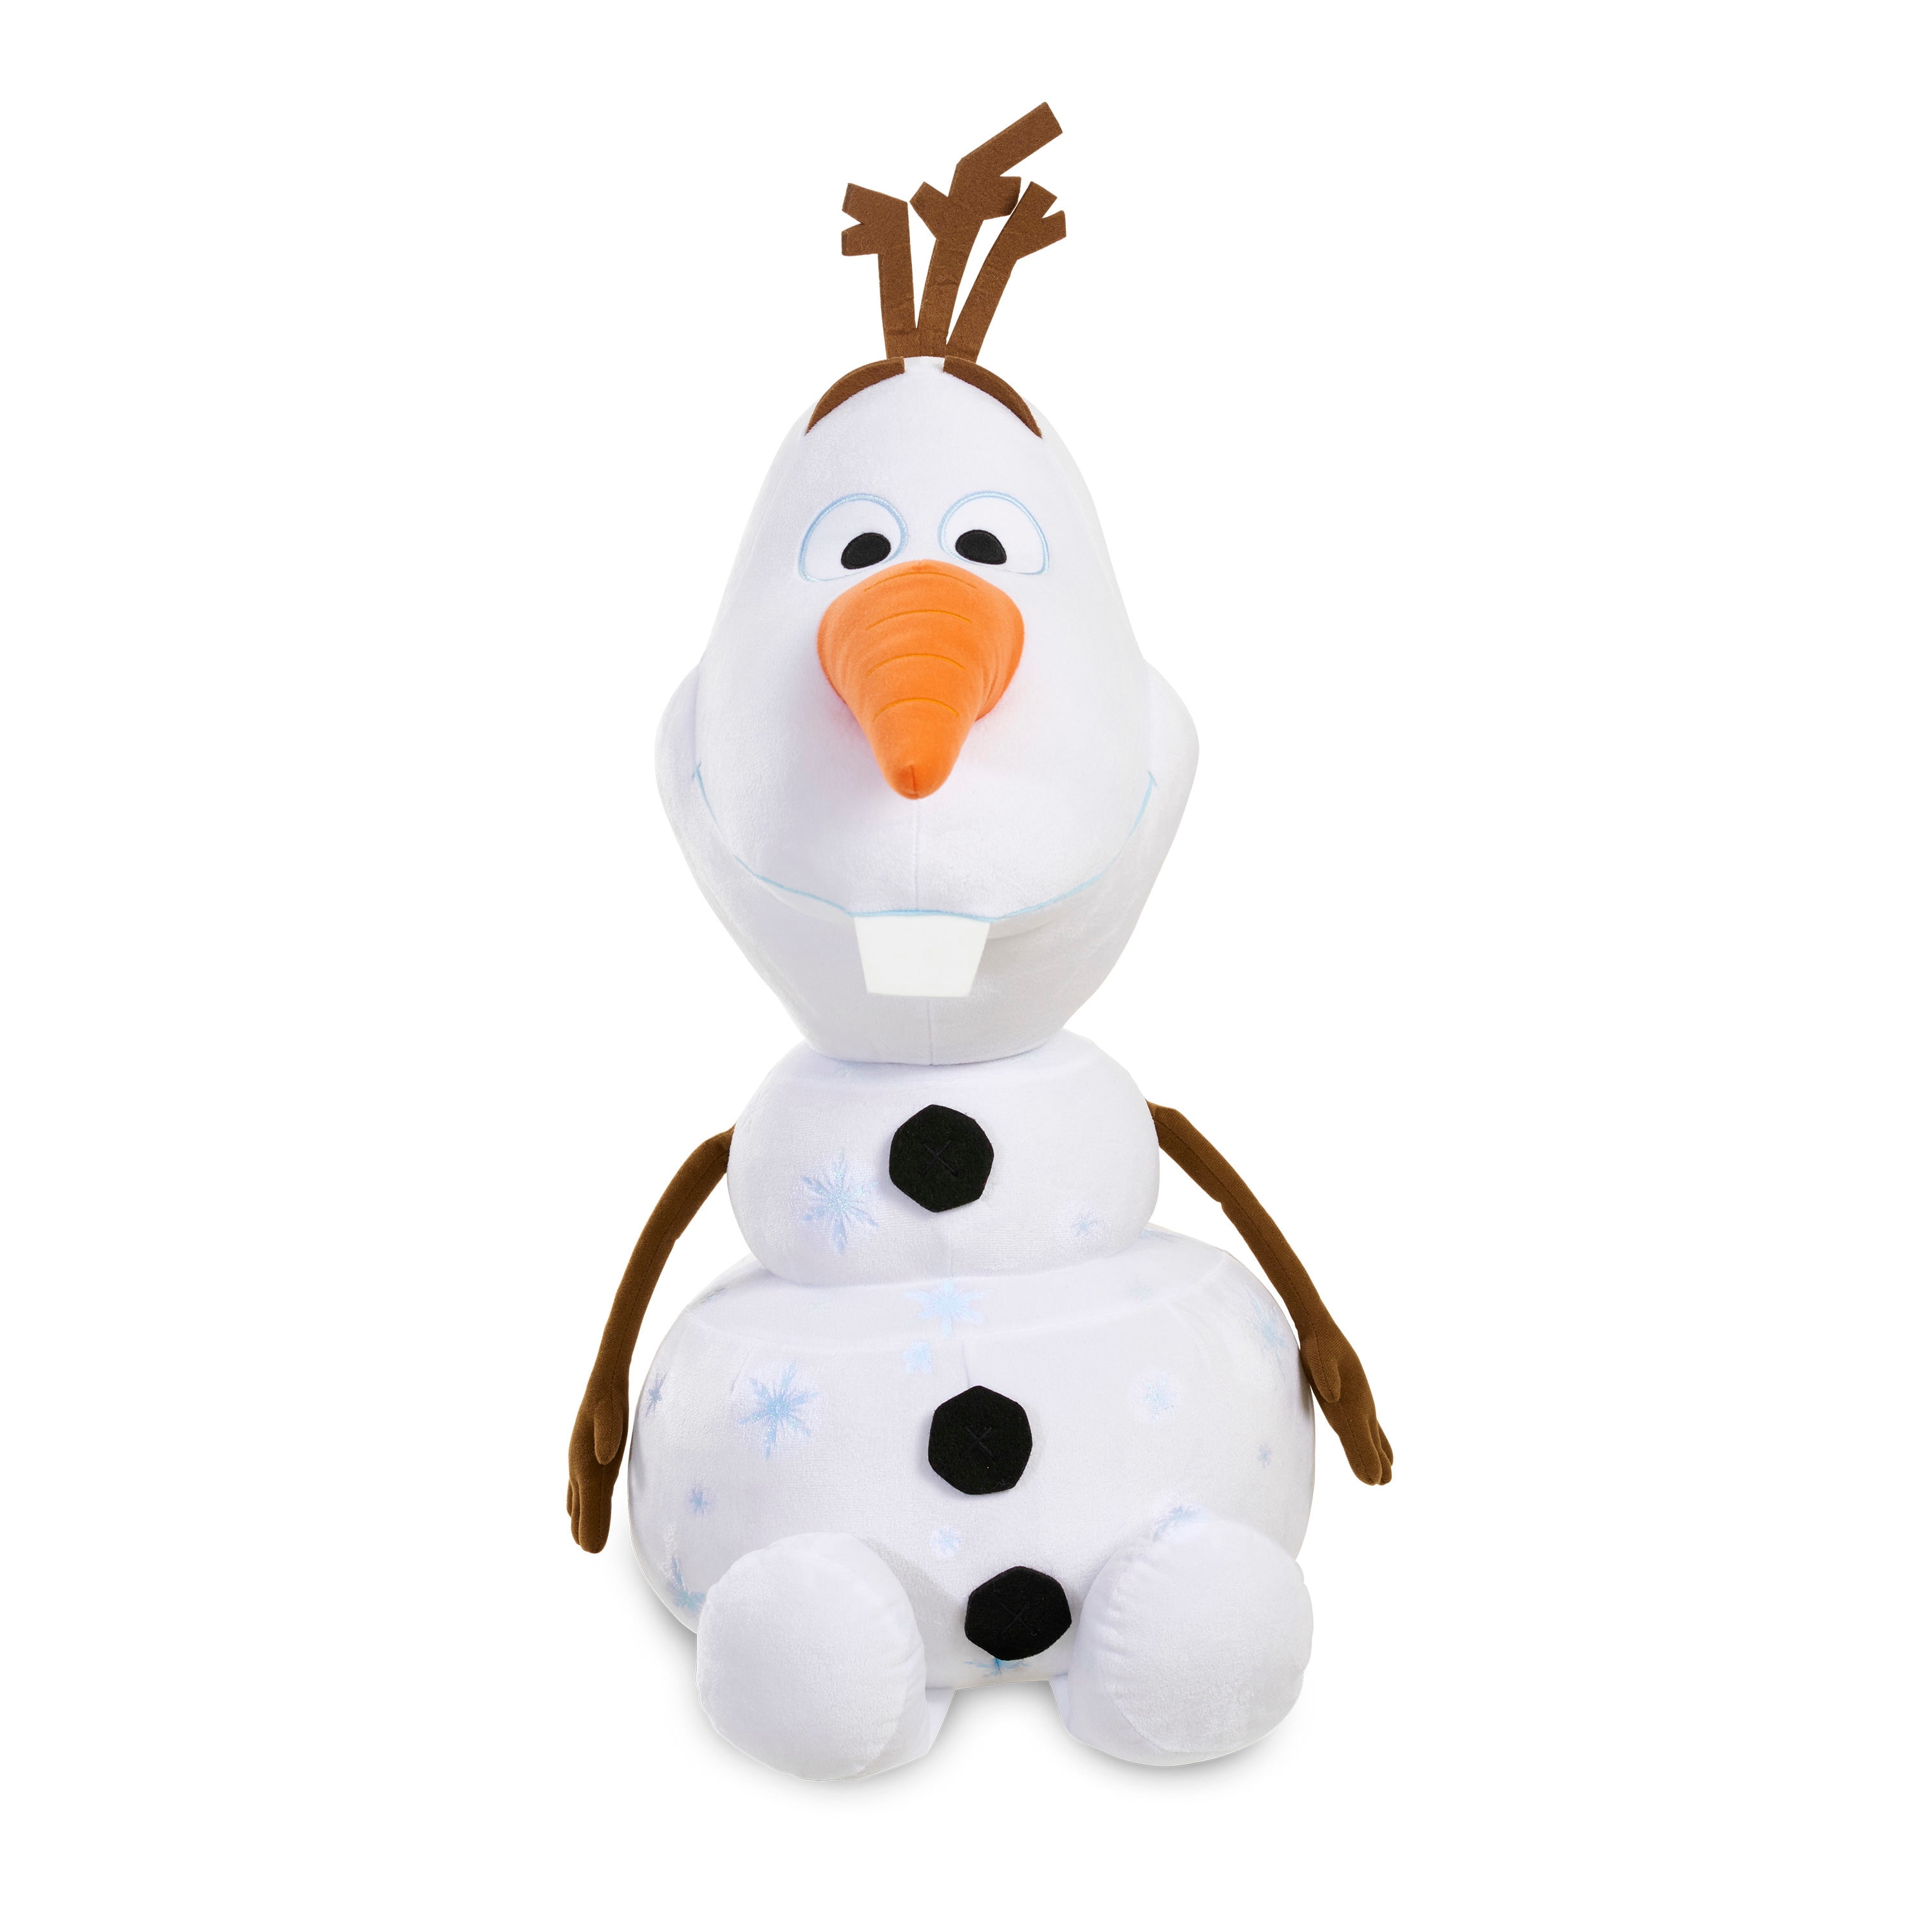 Disney Frozen 2 Plush Olaf 12 Inch Tall Stuffed Animal B15 for sale online 